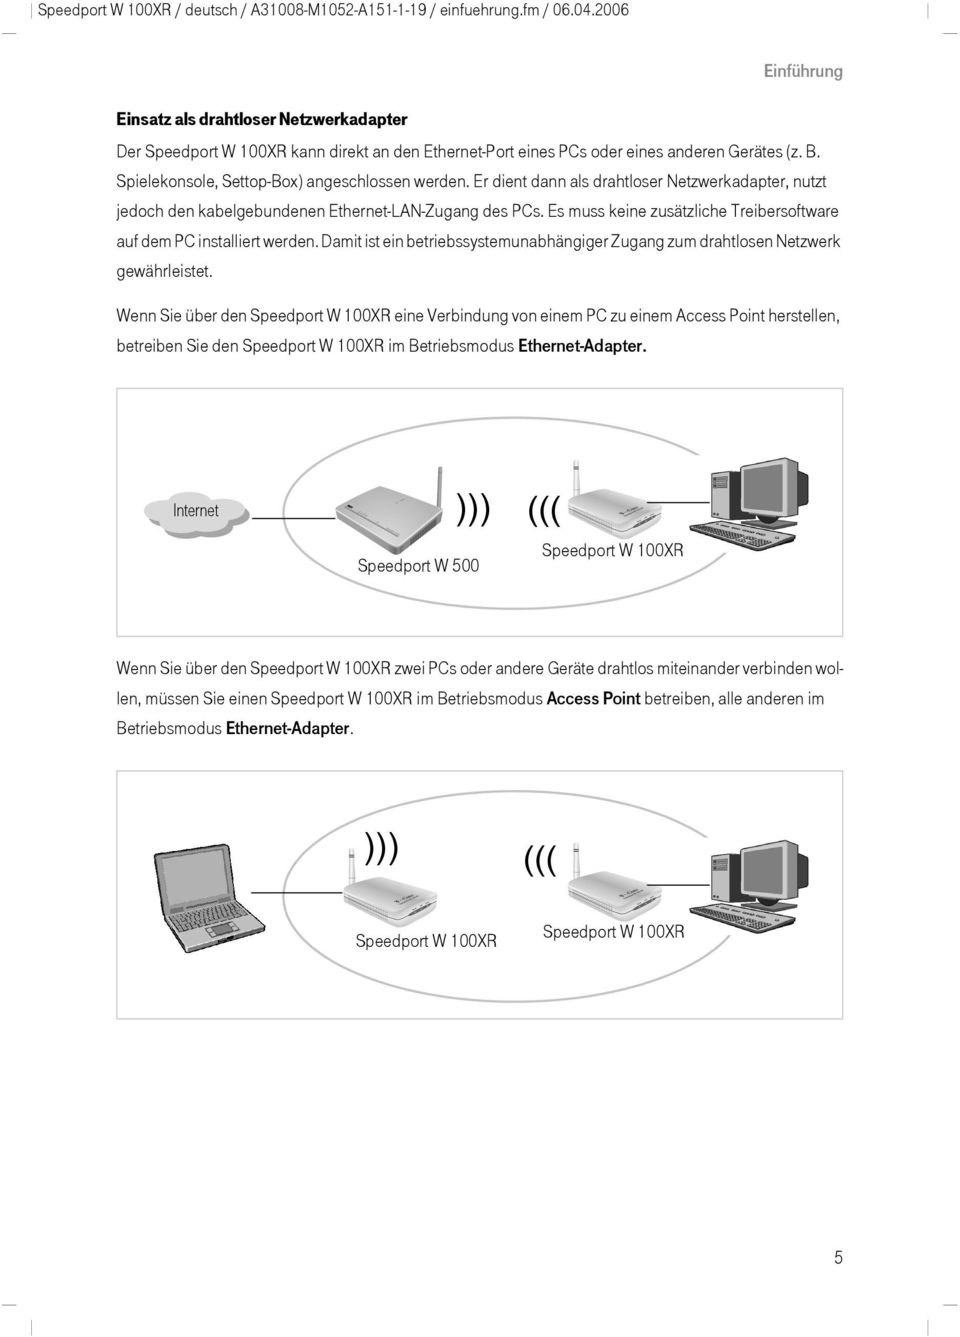 Spielekonsole, Settop-Box) angeschlossen werden. Er dient dann als drahtloser Netzwerkadapter, nutzt jedoch den kabelgebundenen Ethernet-LAN-Zugang des PCs.